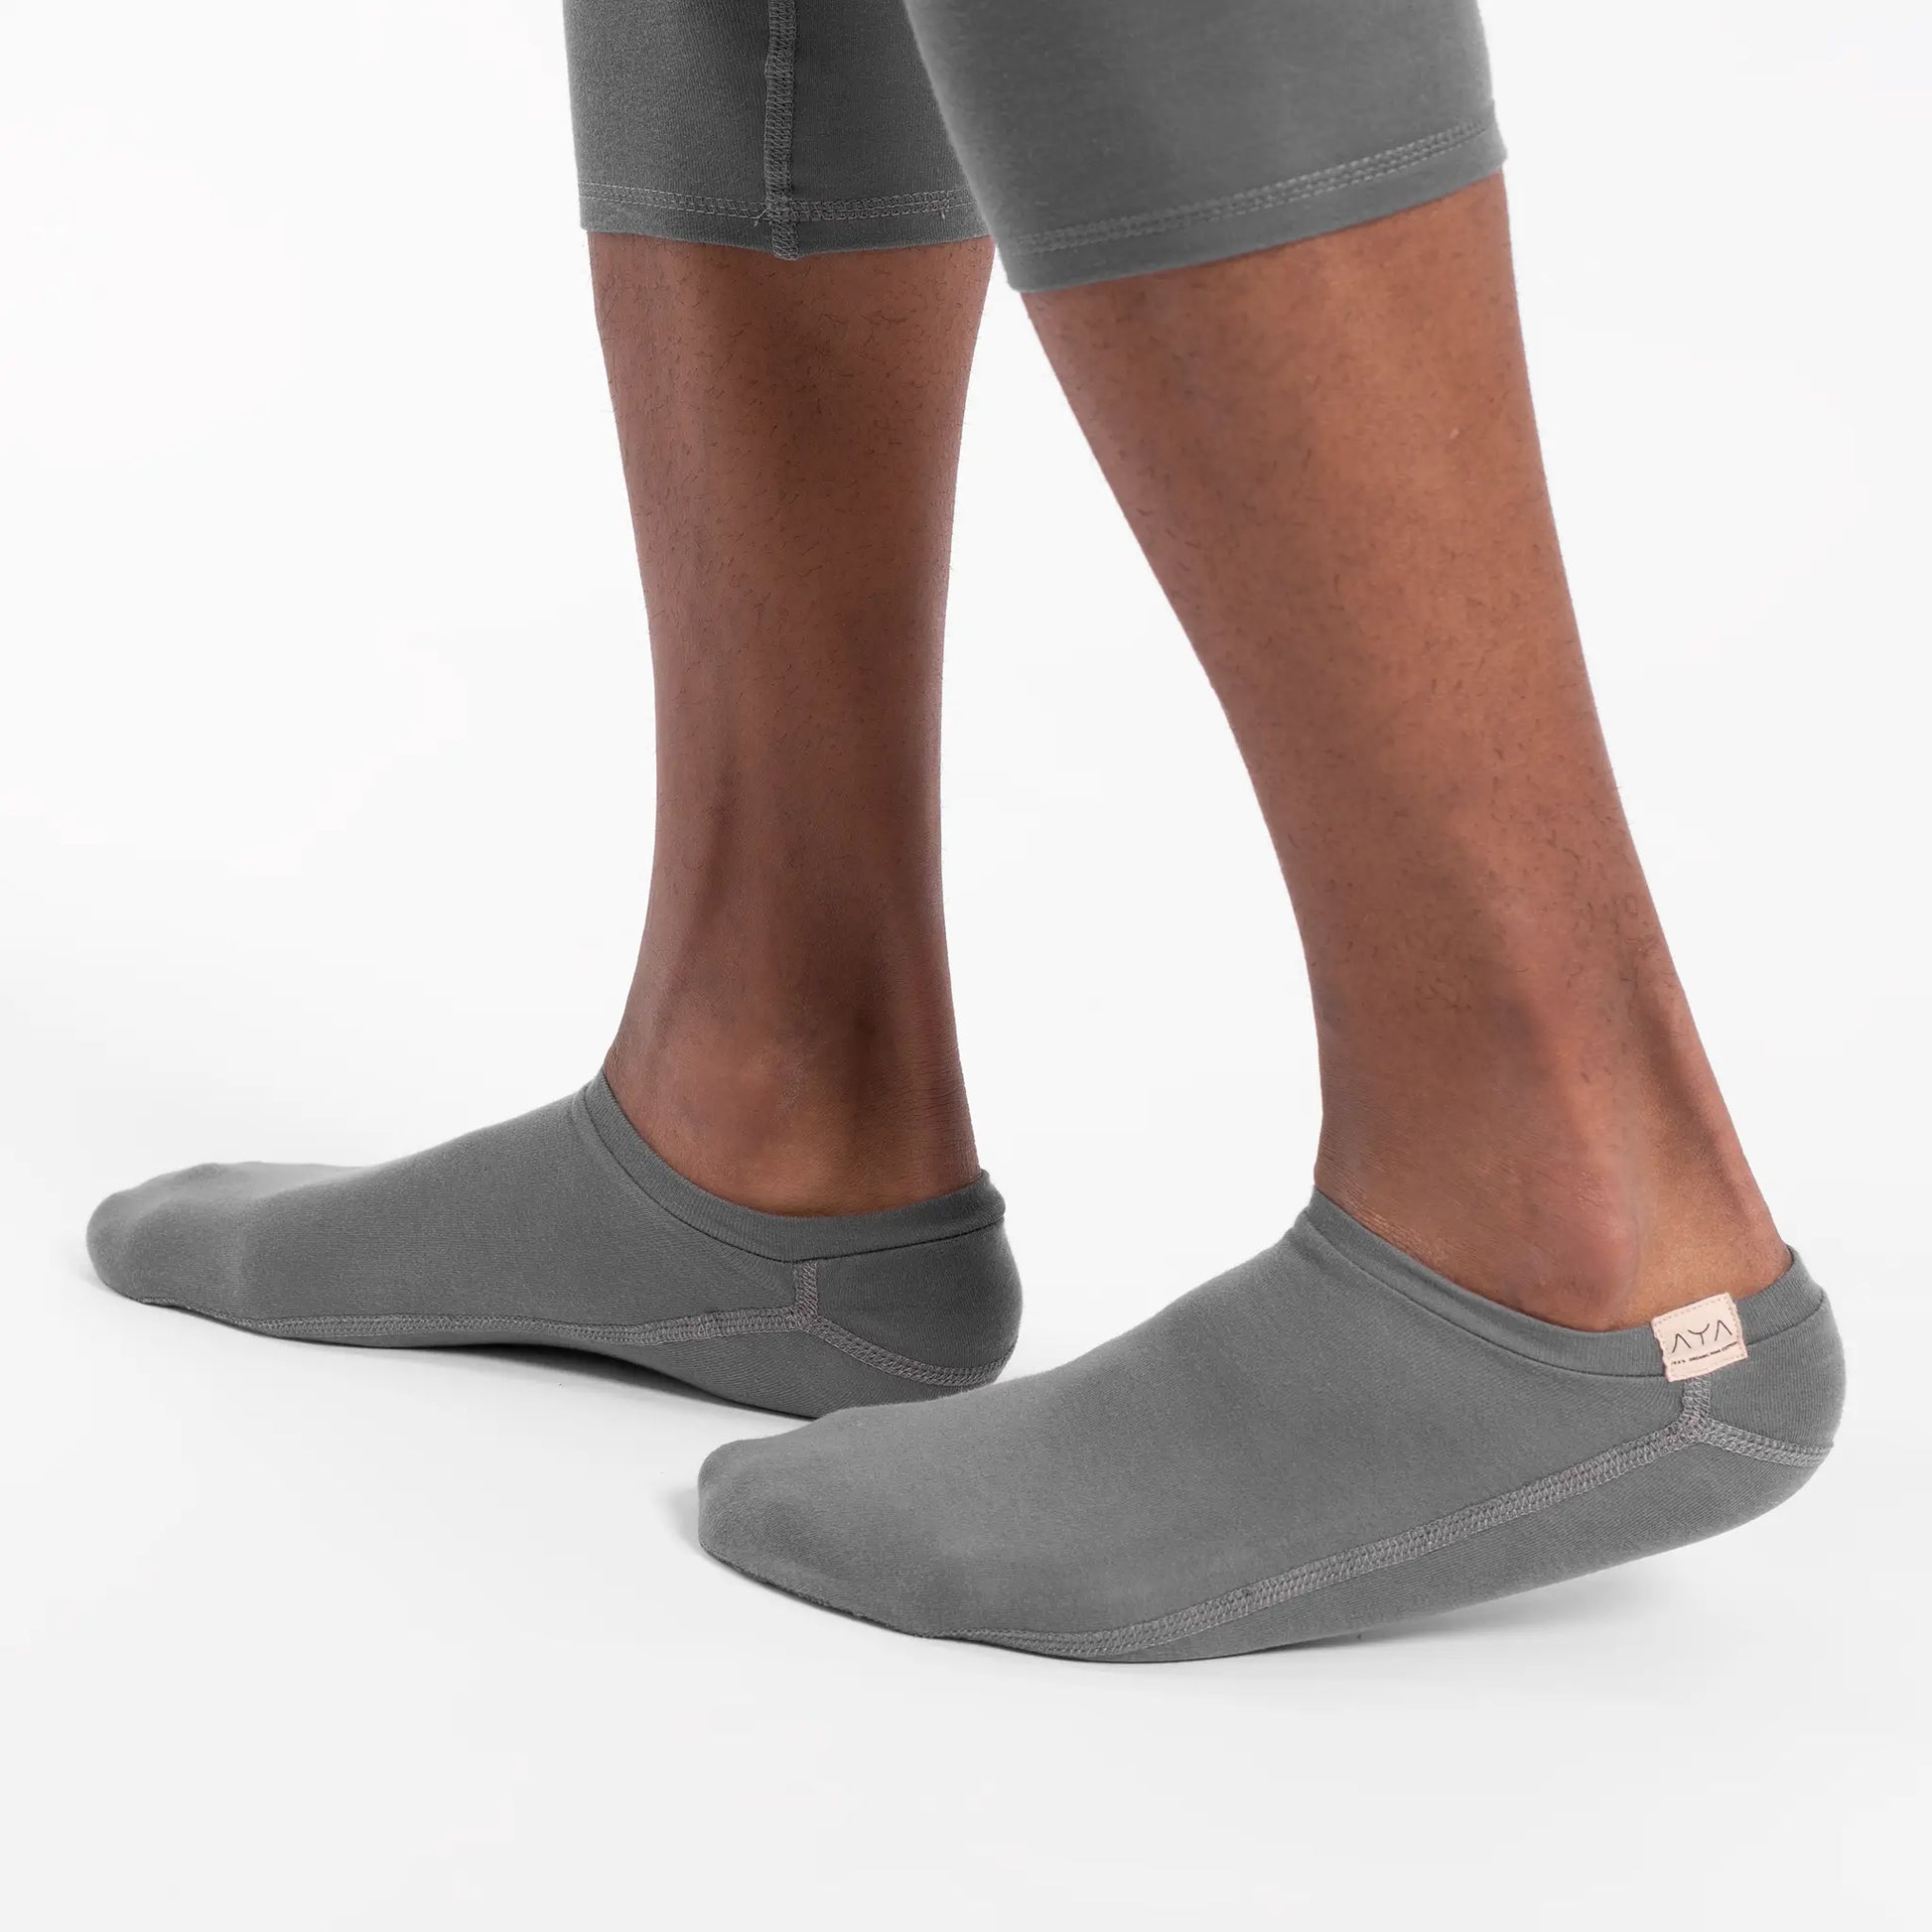 unisex slipper socks low impact color natural gray